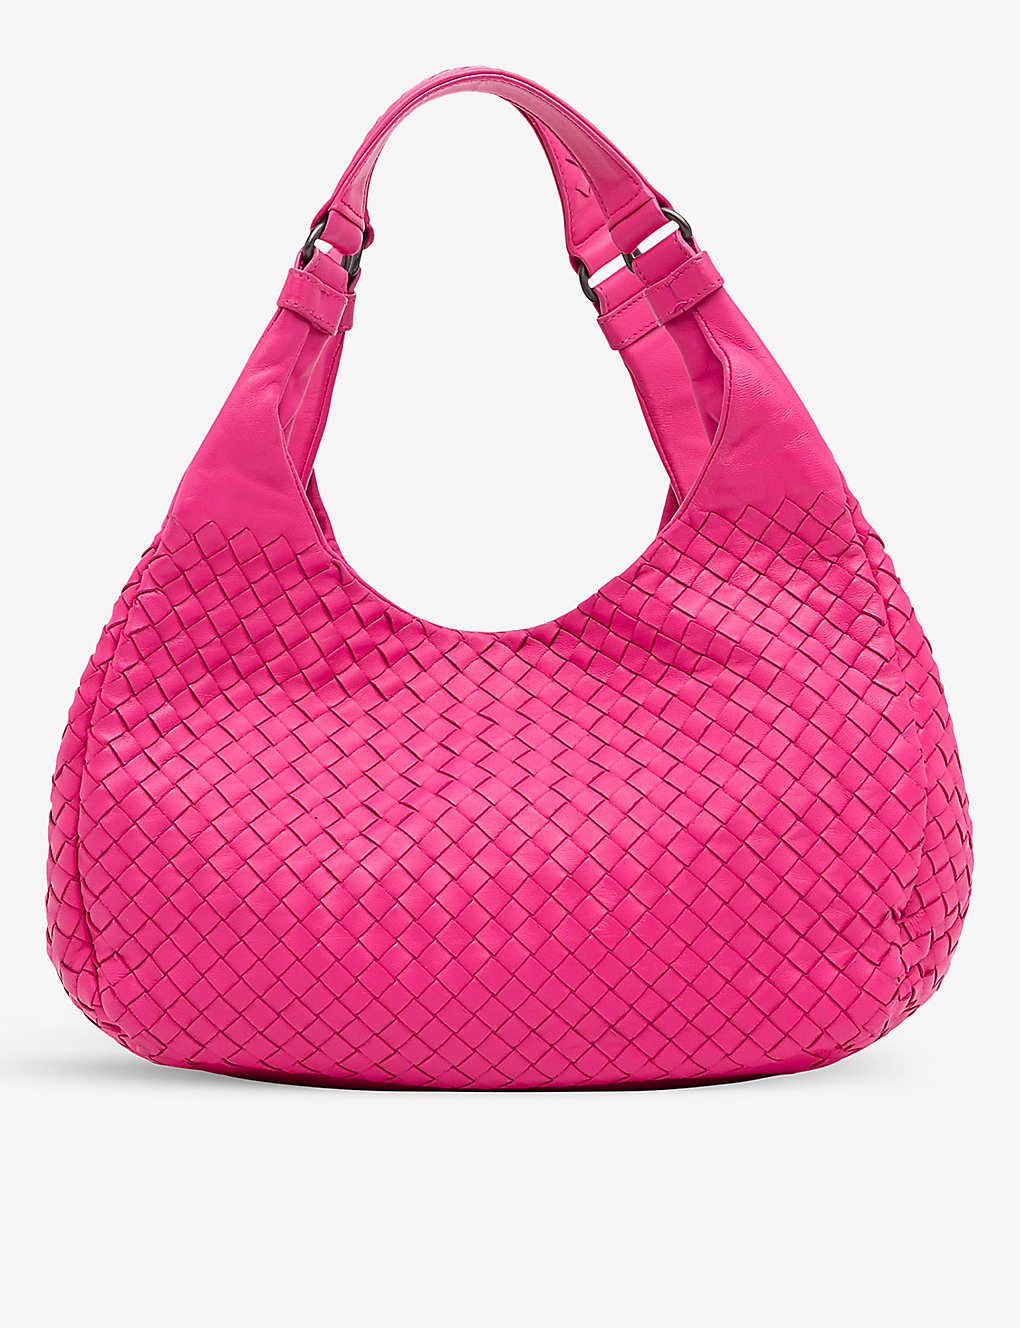 Reselfridges Womens Pink Pre-loved Bottega Veneta Campana Leather Top-handle Bag